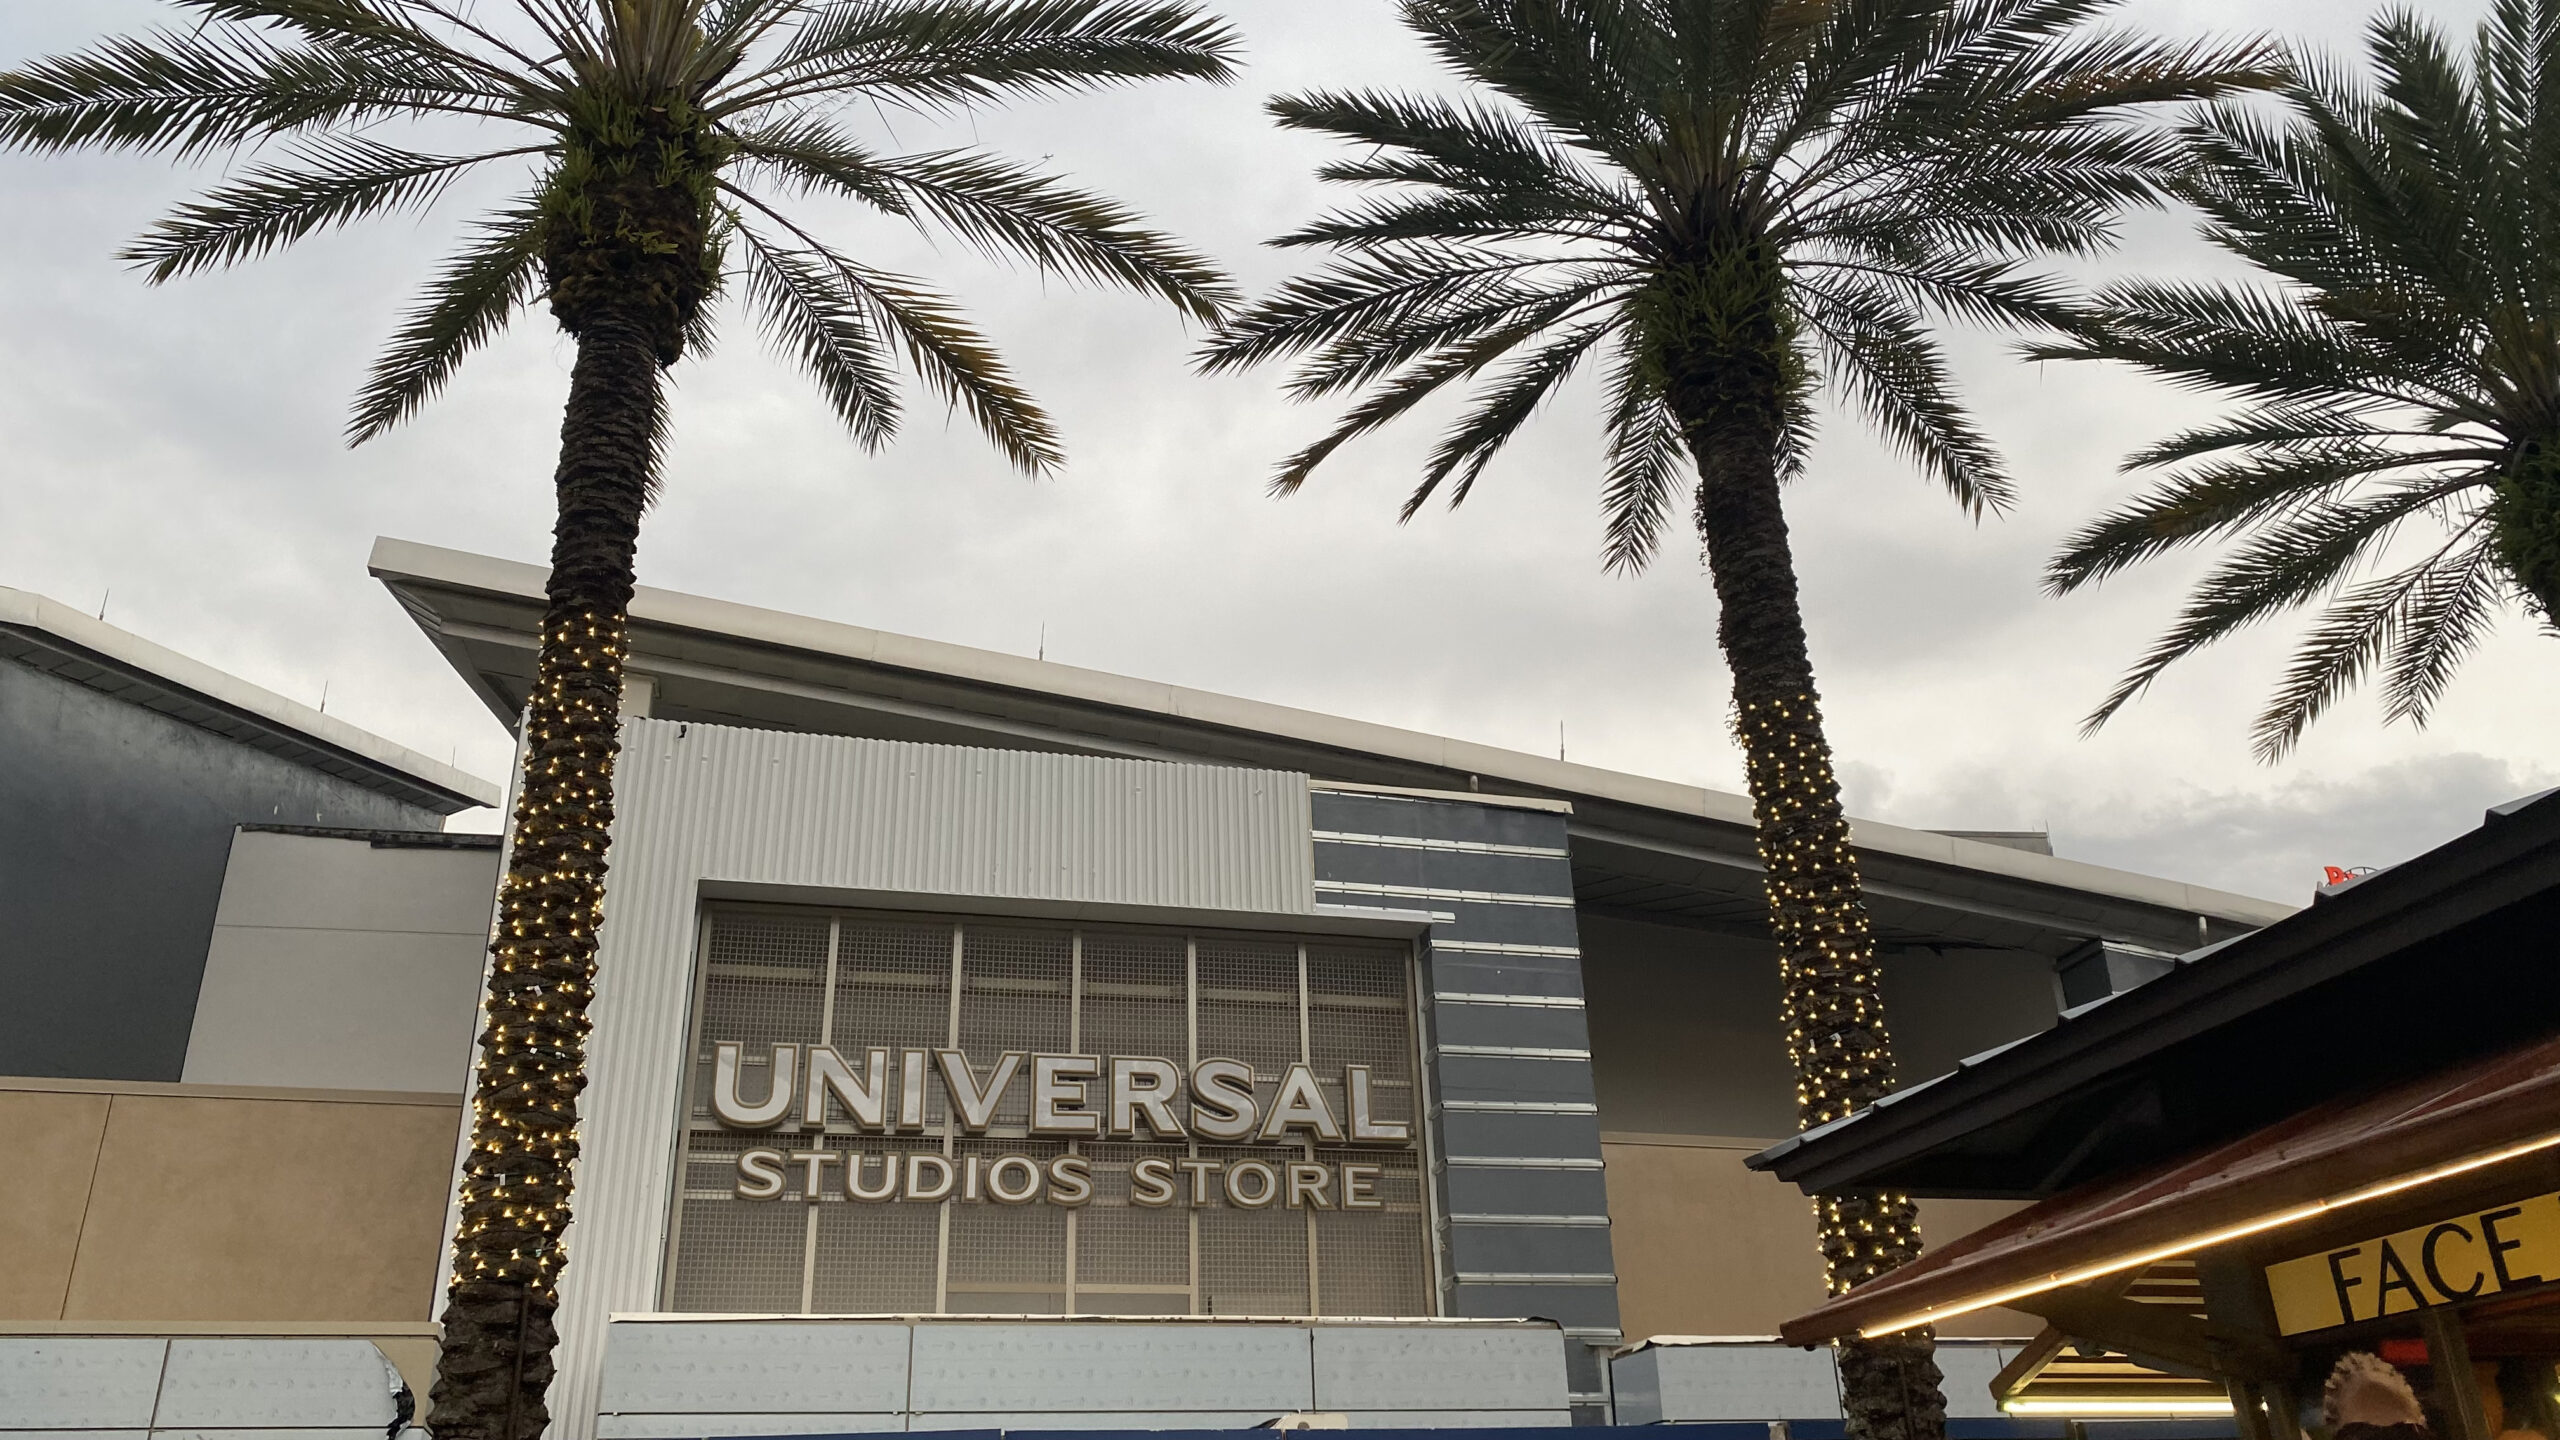 Universal Studios Store 